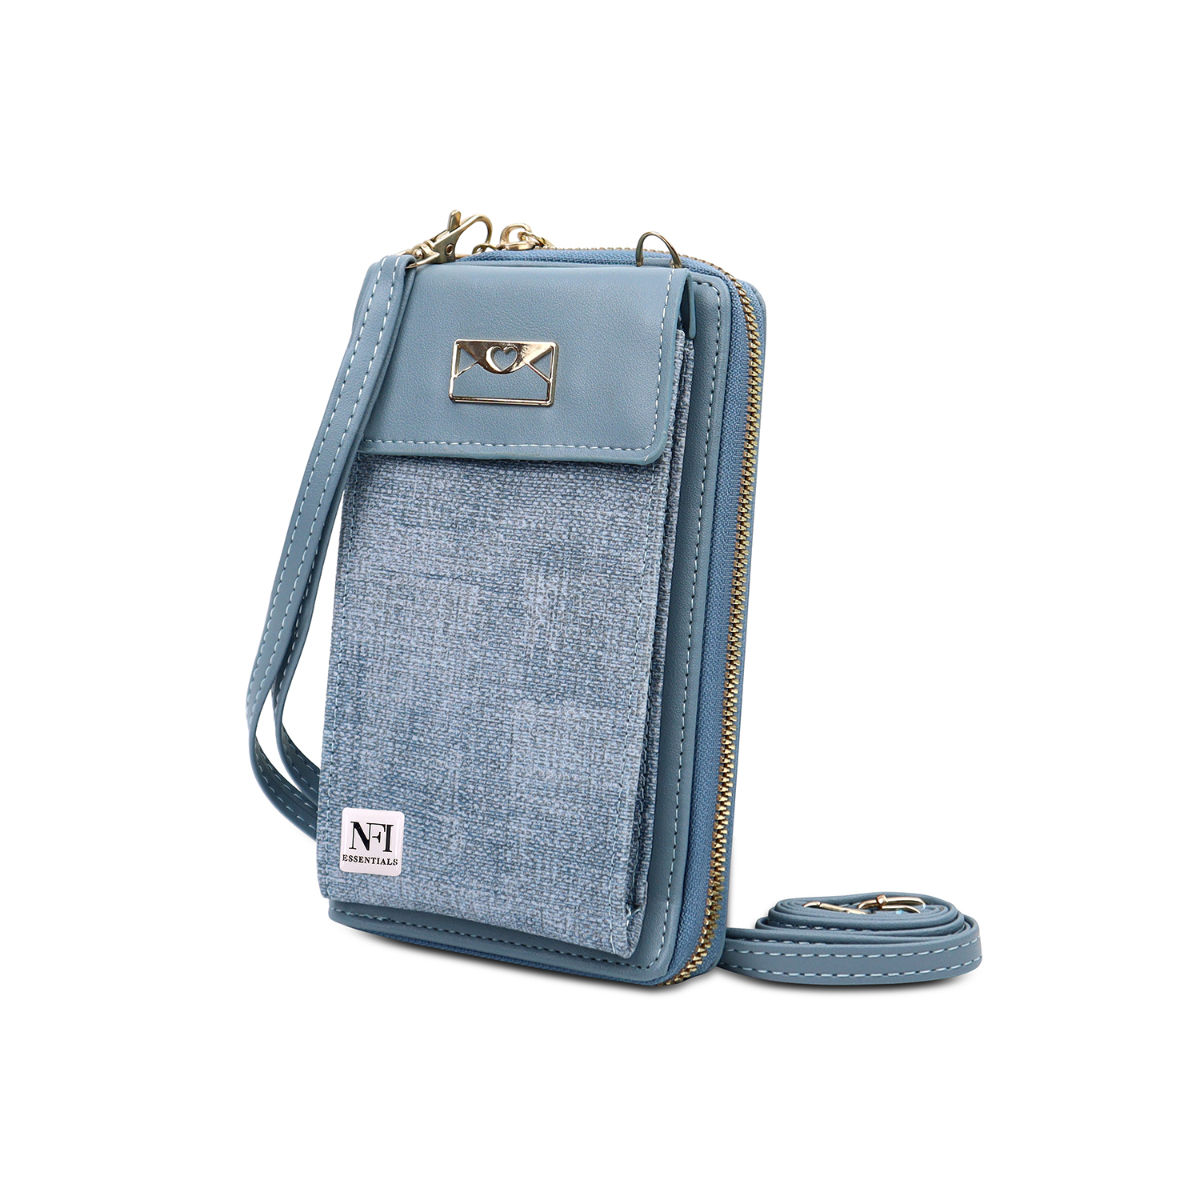 Festivaly Imported Single Zipper Around The Bag Thread Beauty Style Mini  Phone Bag Seductive Ladies Bag